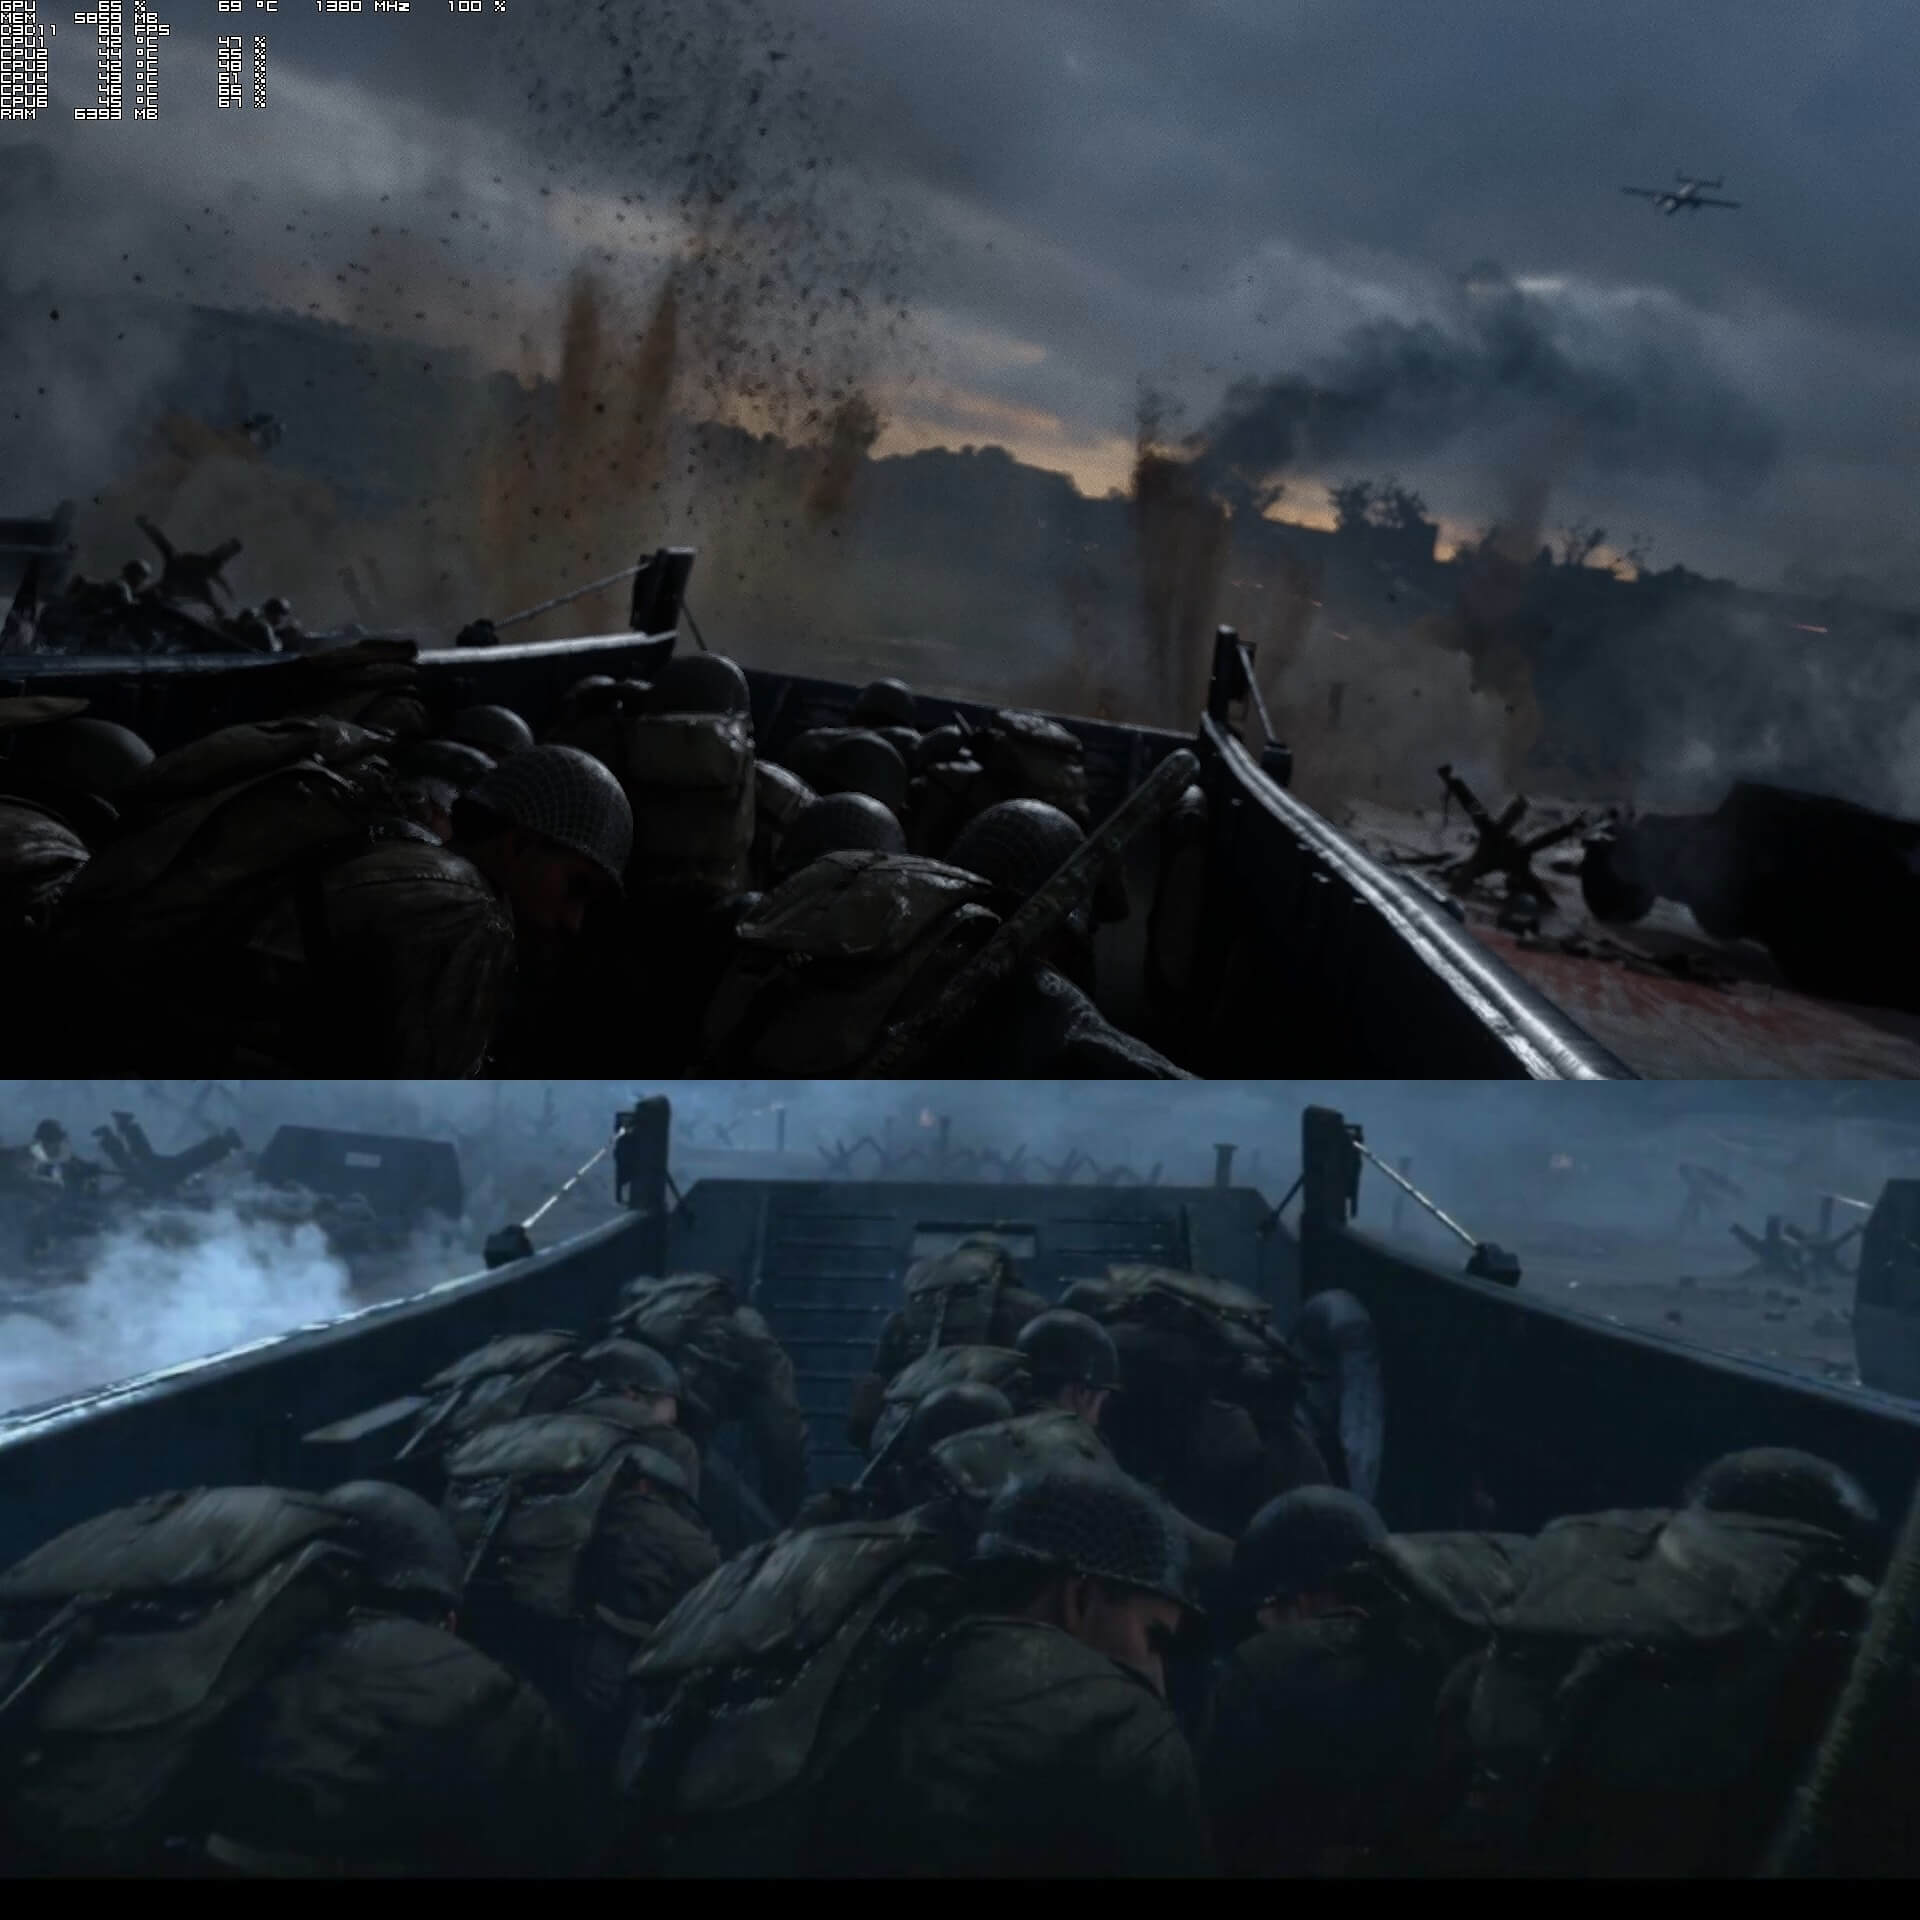 Call of Duty: WW2 (PC) Minimum vs. Maximum - Graphics comparison